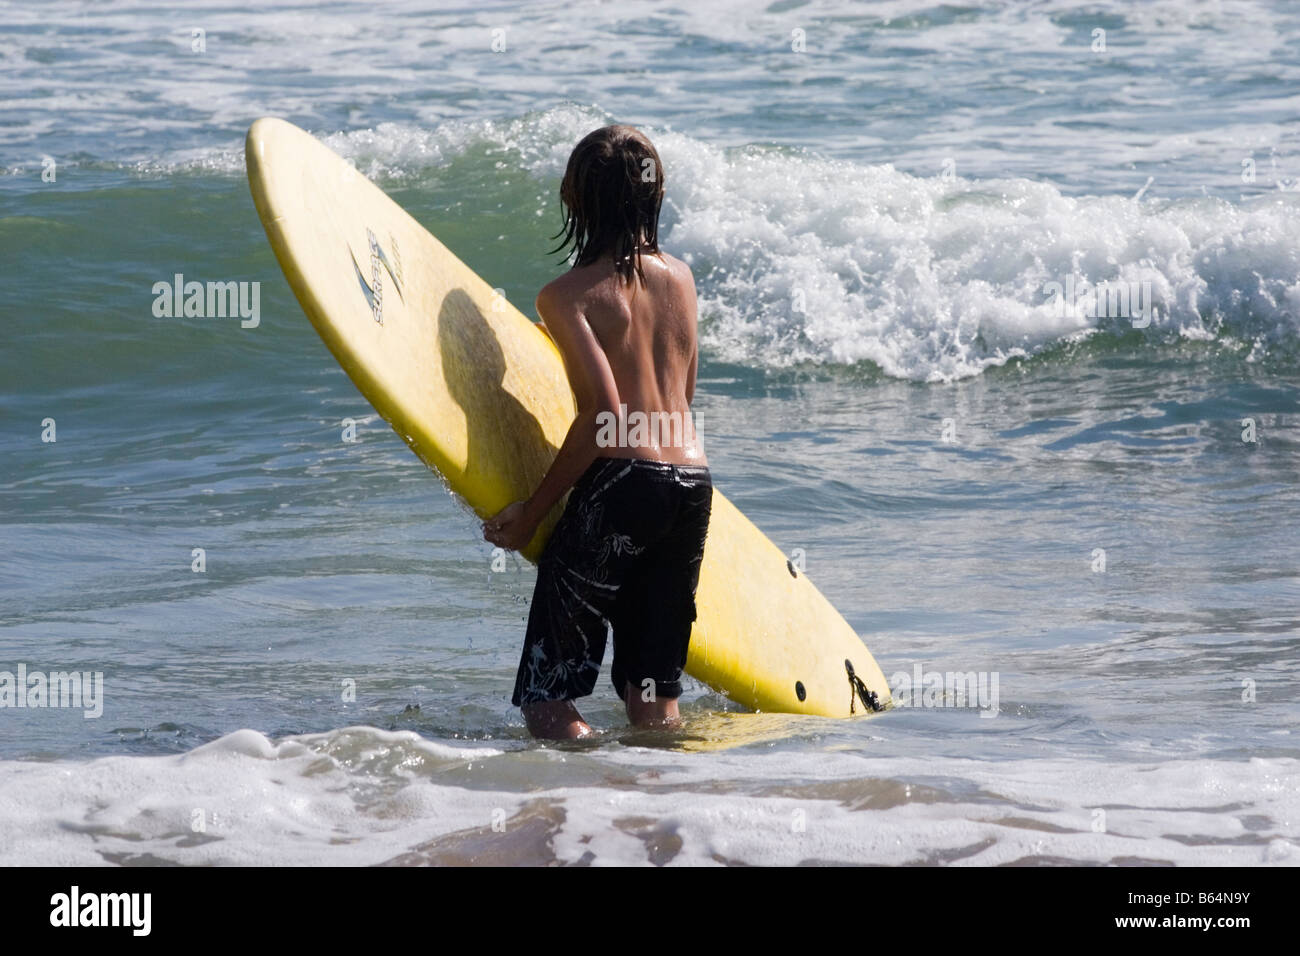 Young-California surfer Stockfoto